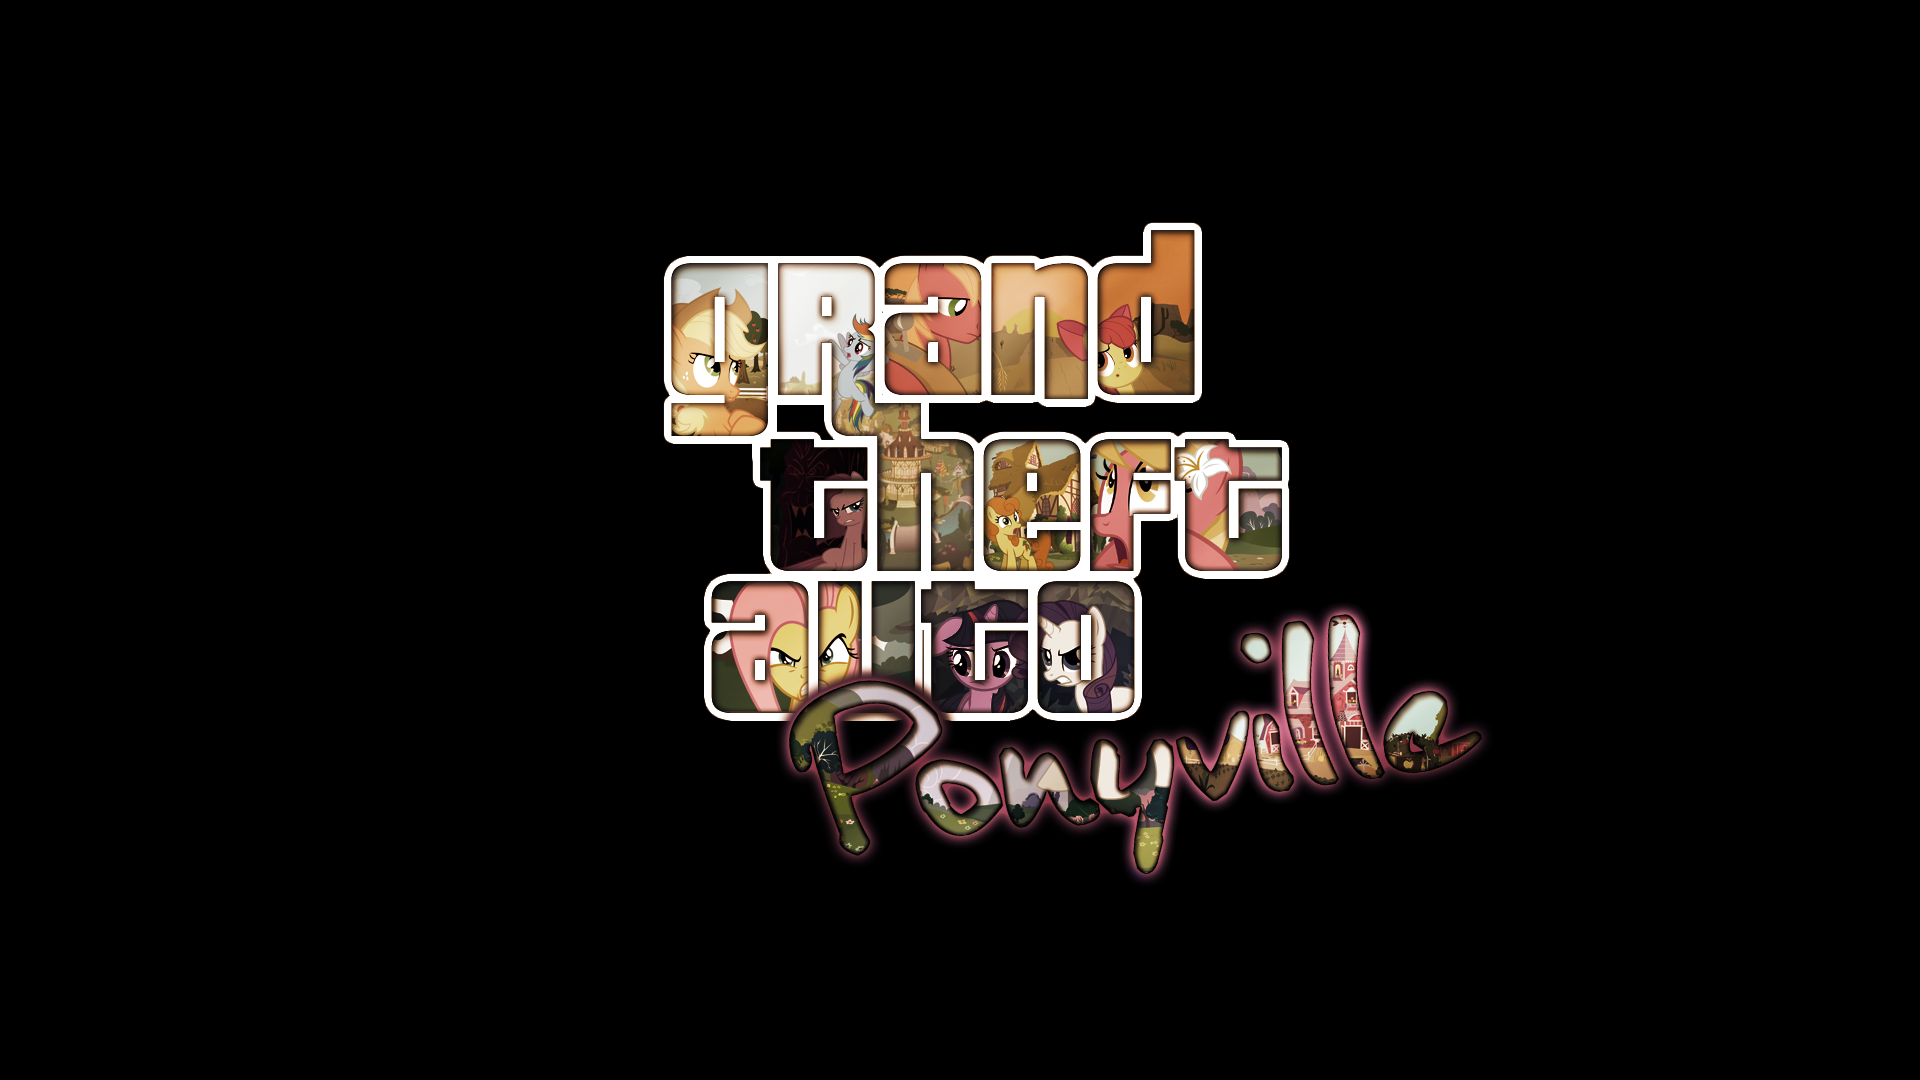 Grand Theft Auto: Ponyville by SandwichDelta